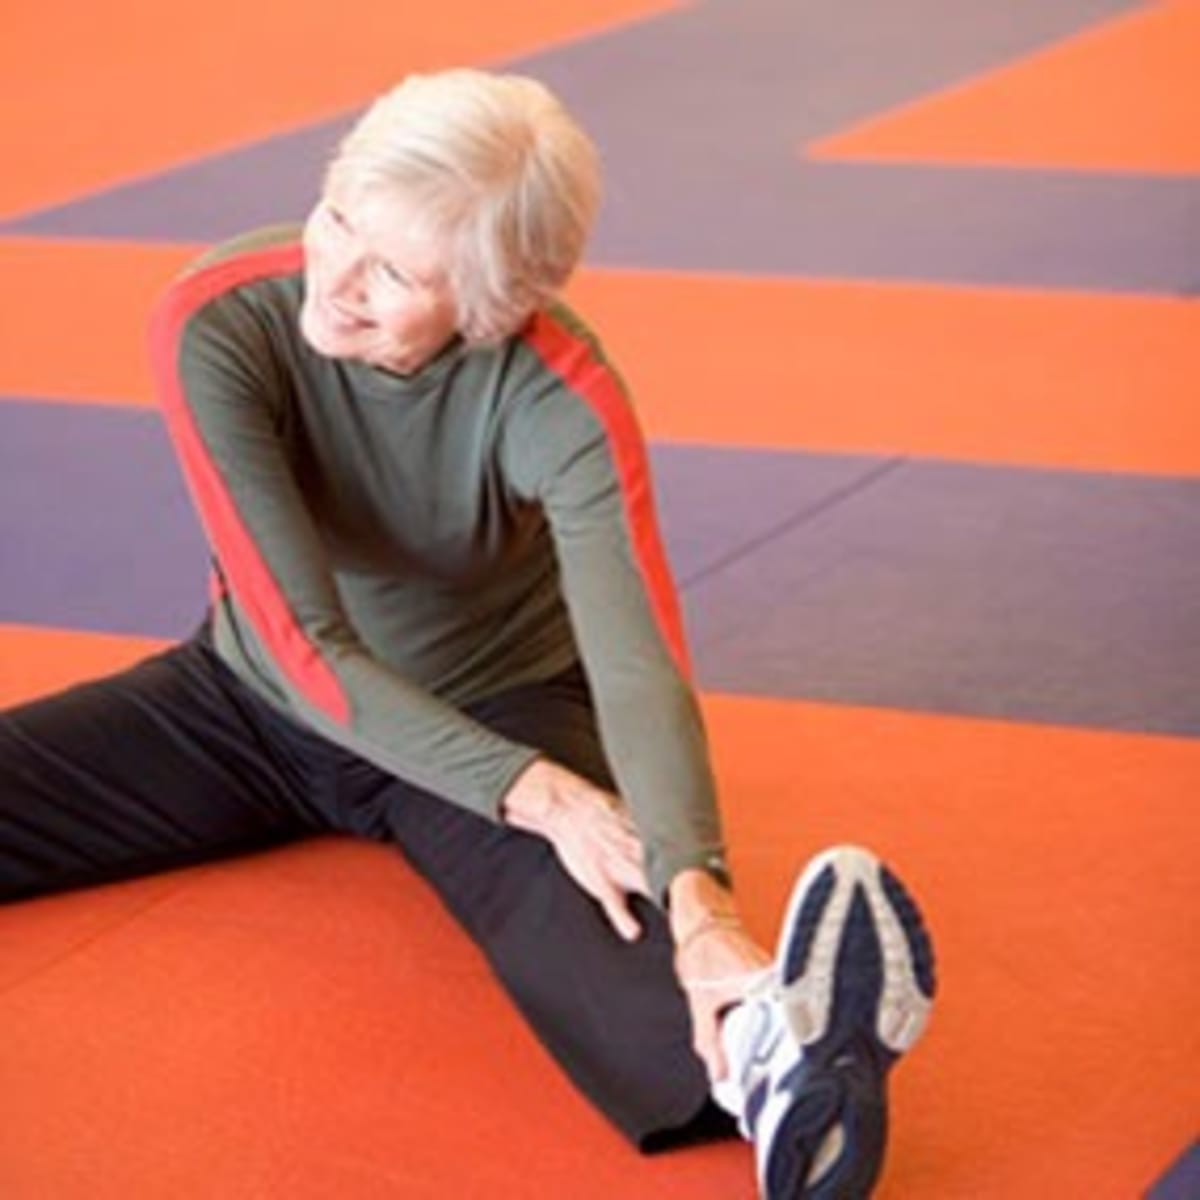 Flexibility Training Wise Up Women's Wellness